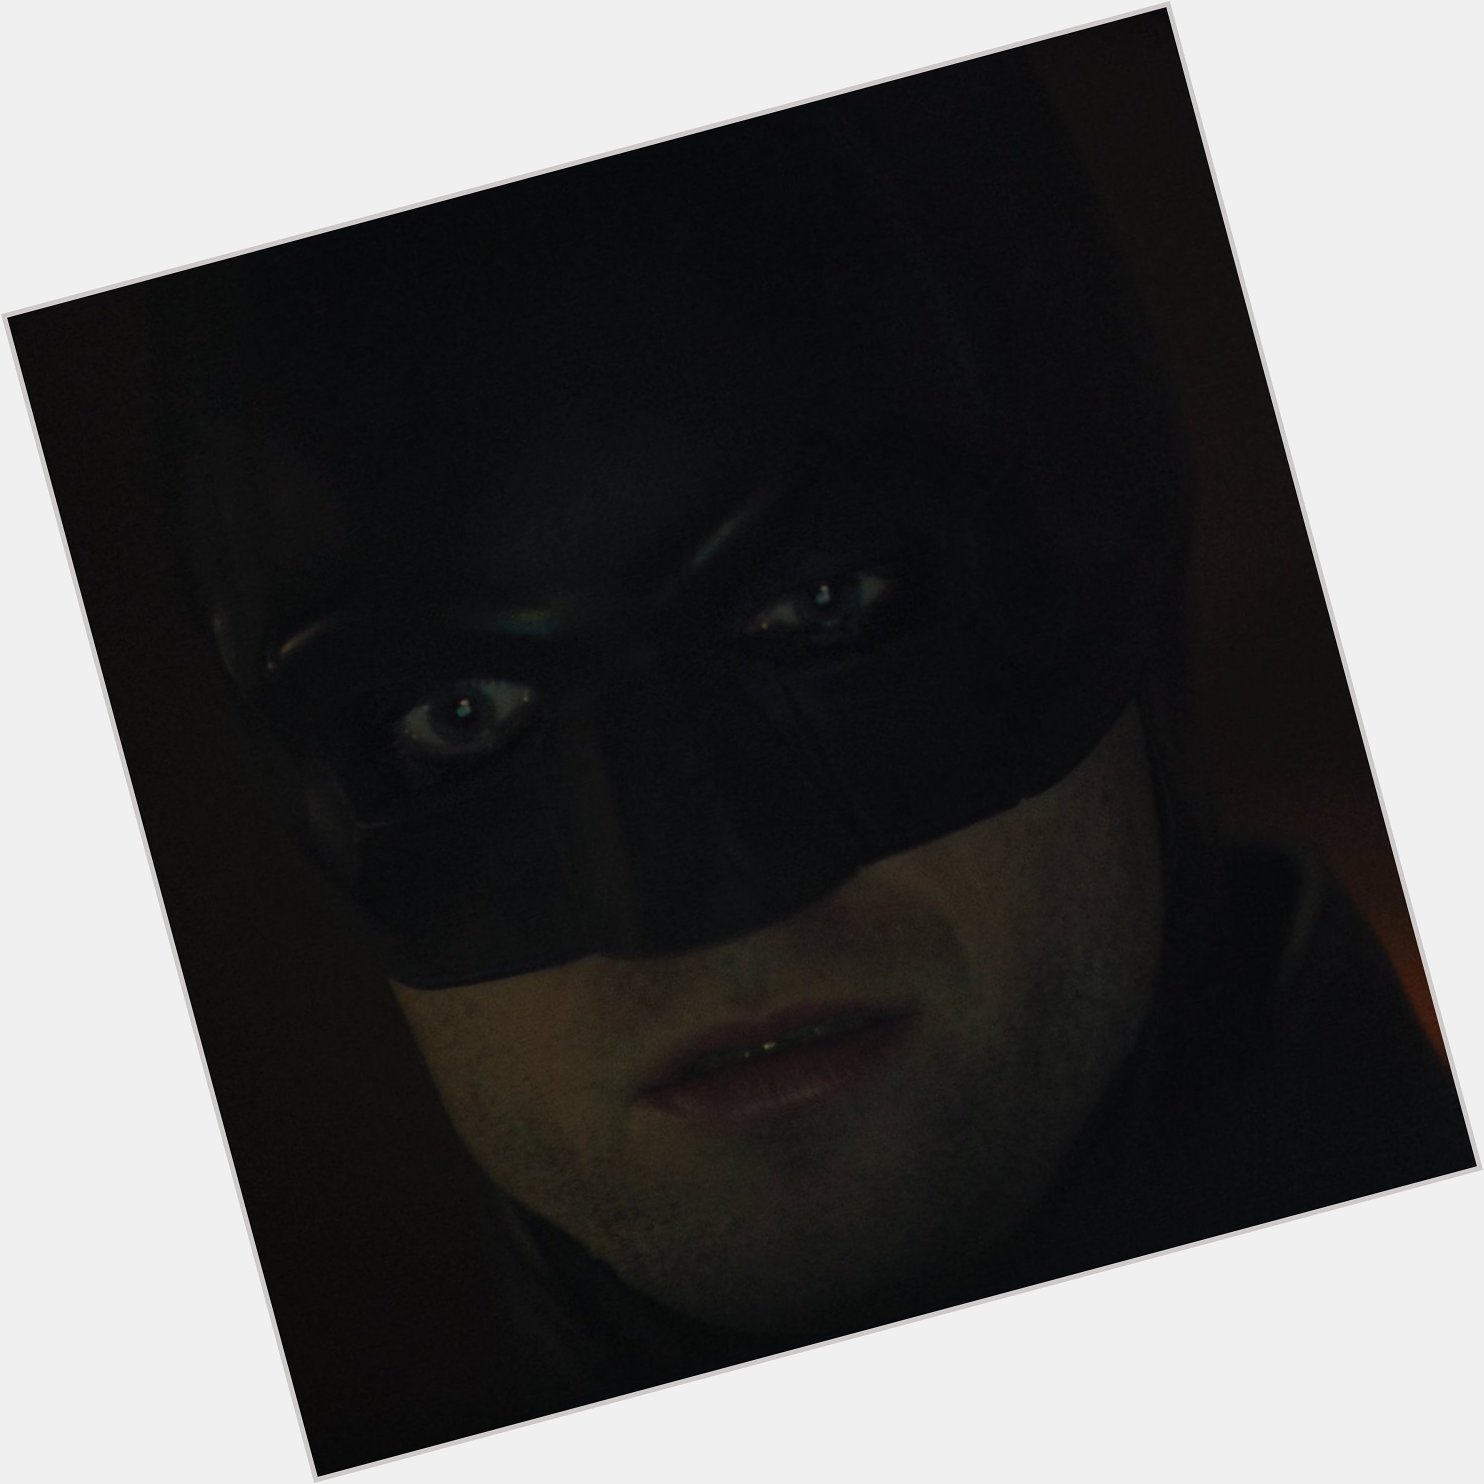 Happy birthday to Robert Pattinson, our crazy-eyed Batman. 